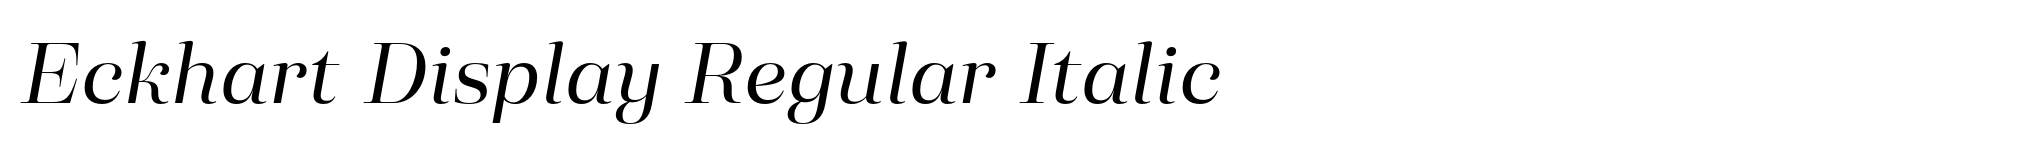 Eckhart Display Regular Italic image